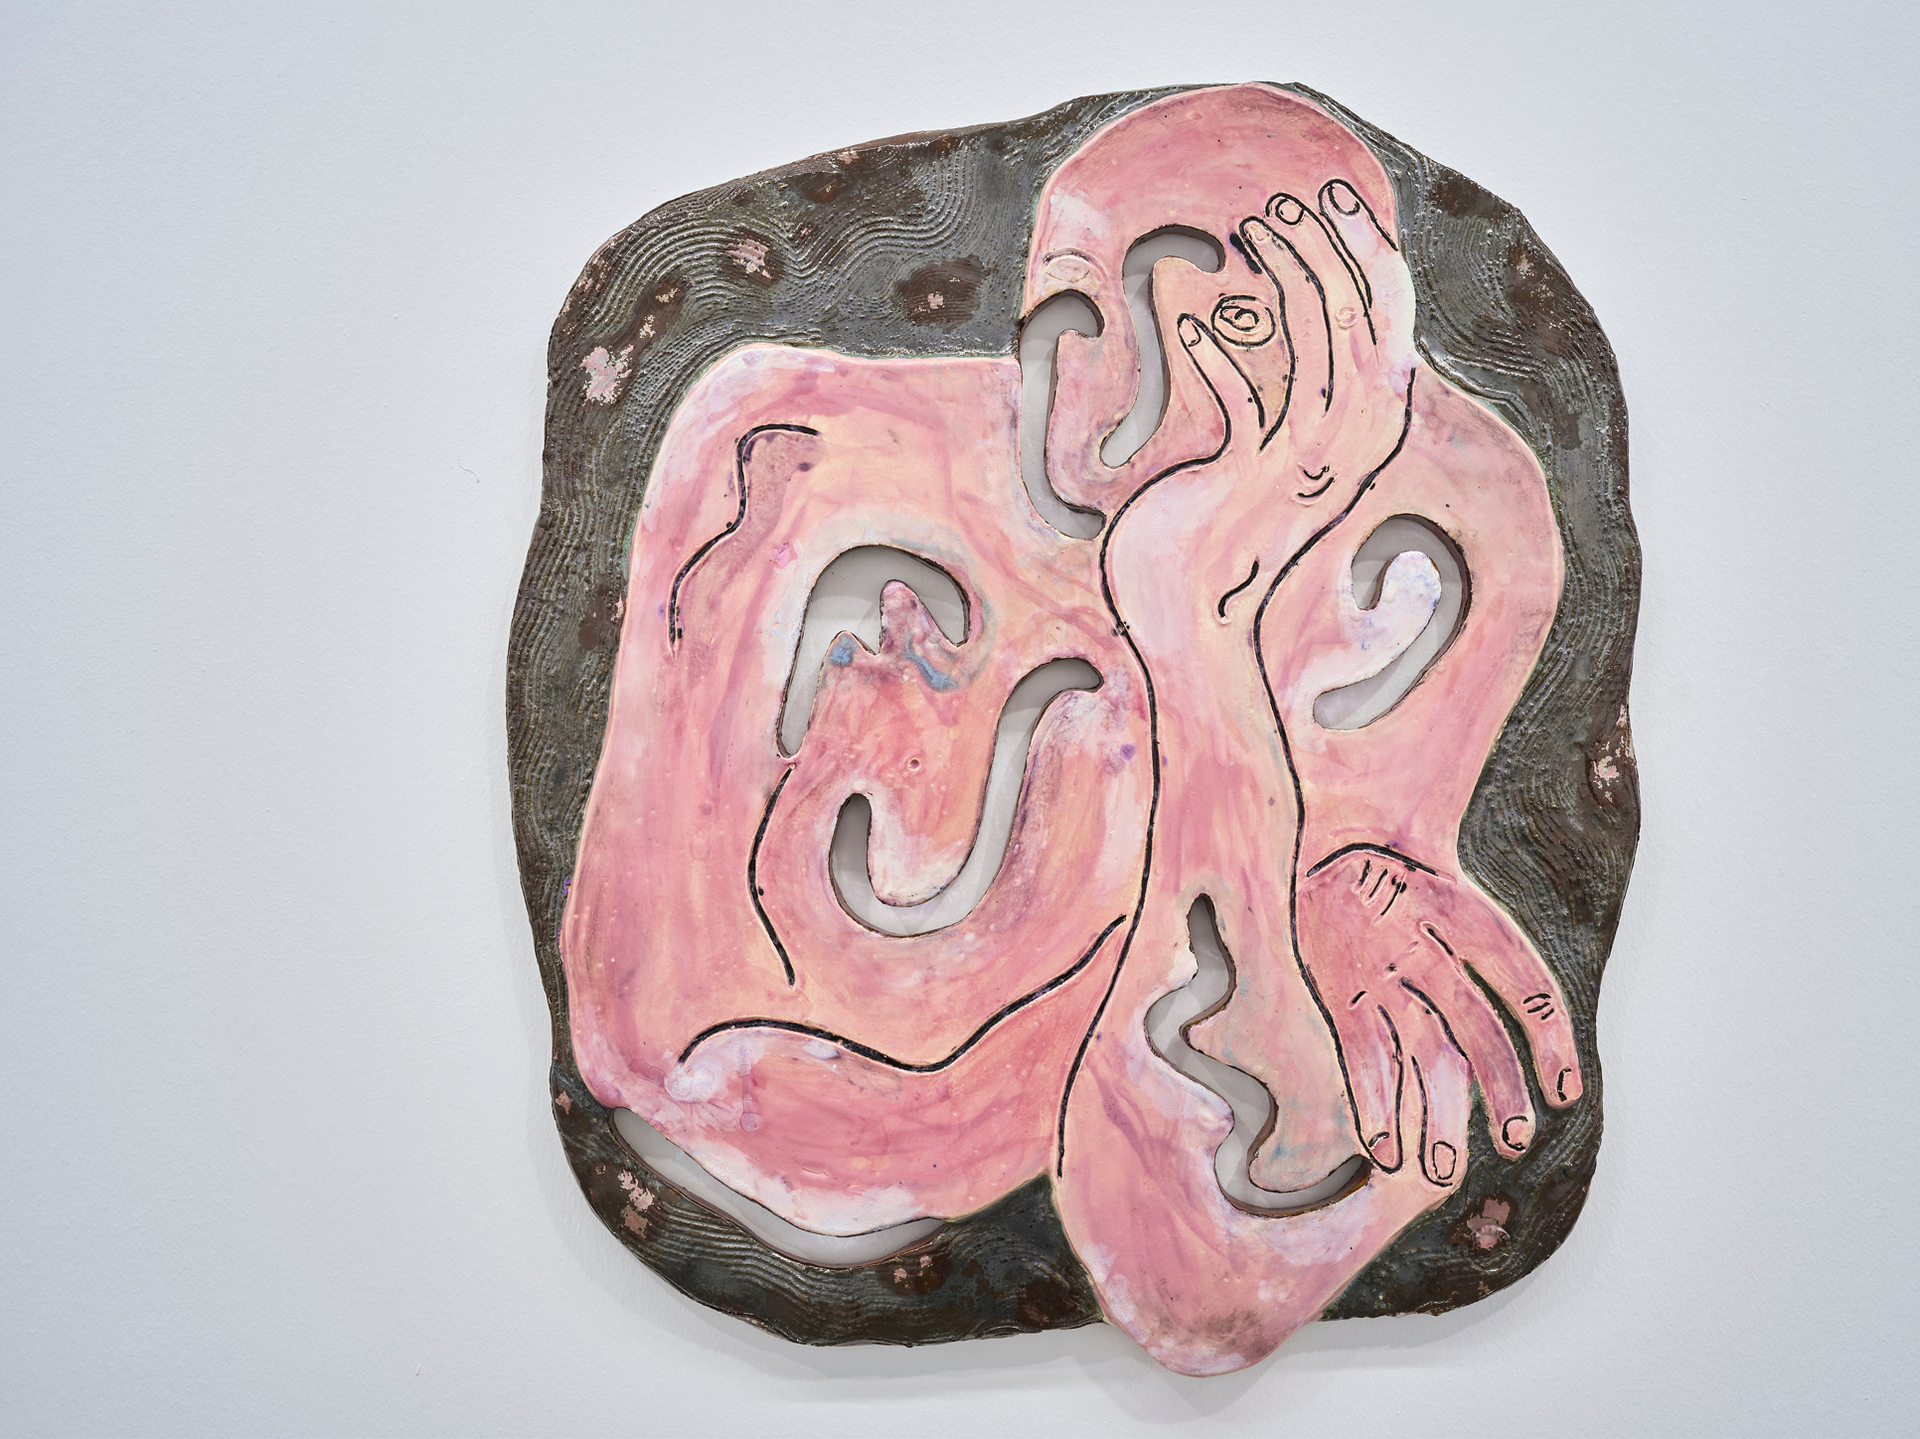 Monika Grabuschnigg, Lost in onism, 2019, Glazed earthenware resin, 62 x 57 x 2.5 cm⁠